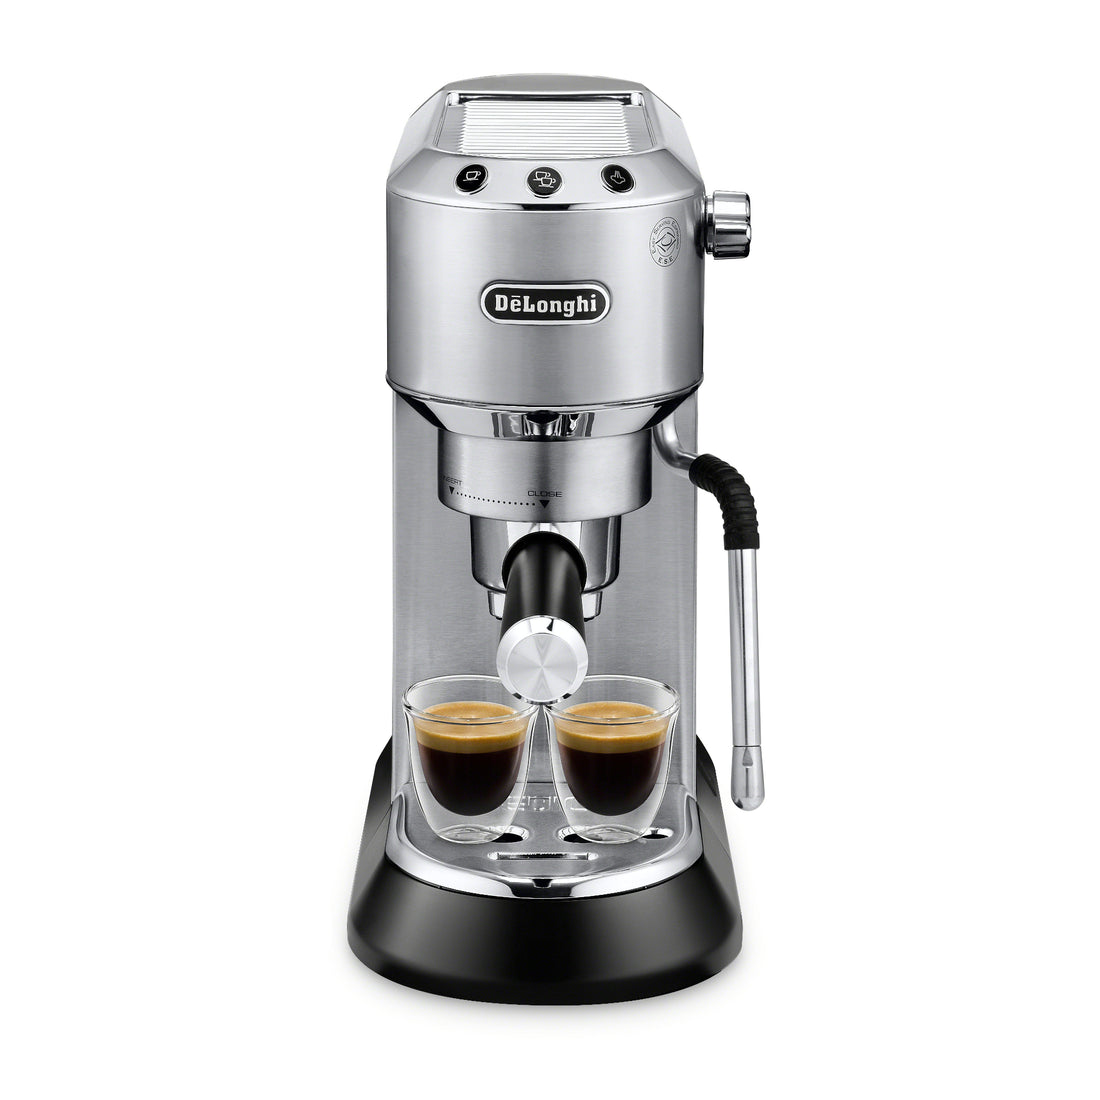 Guide To De'Longhi Coffee Machine Accessories